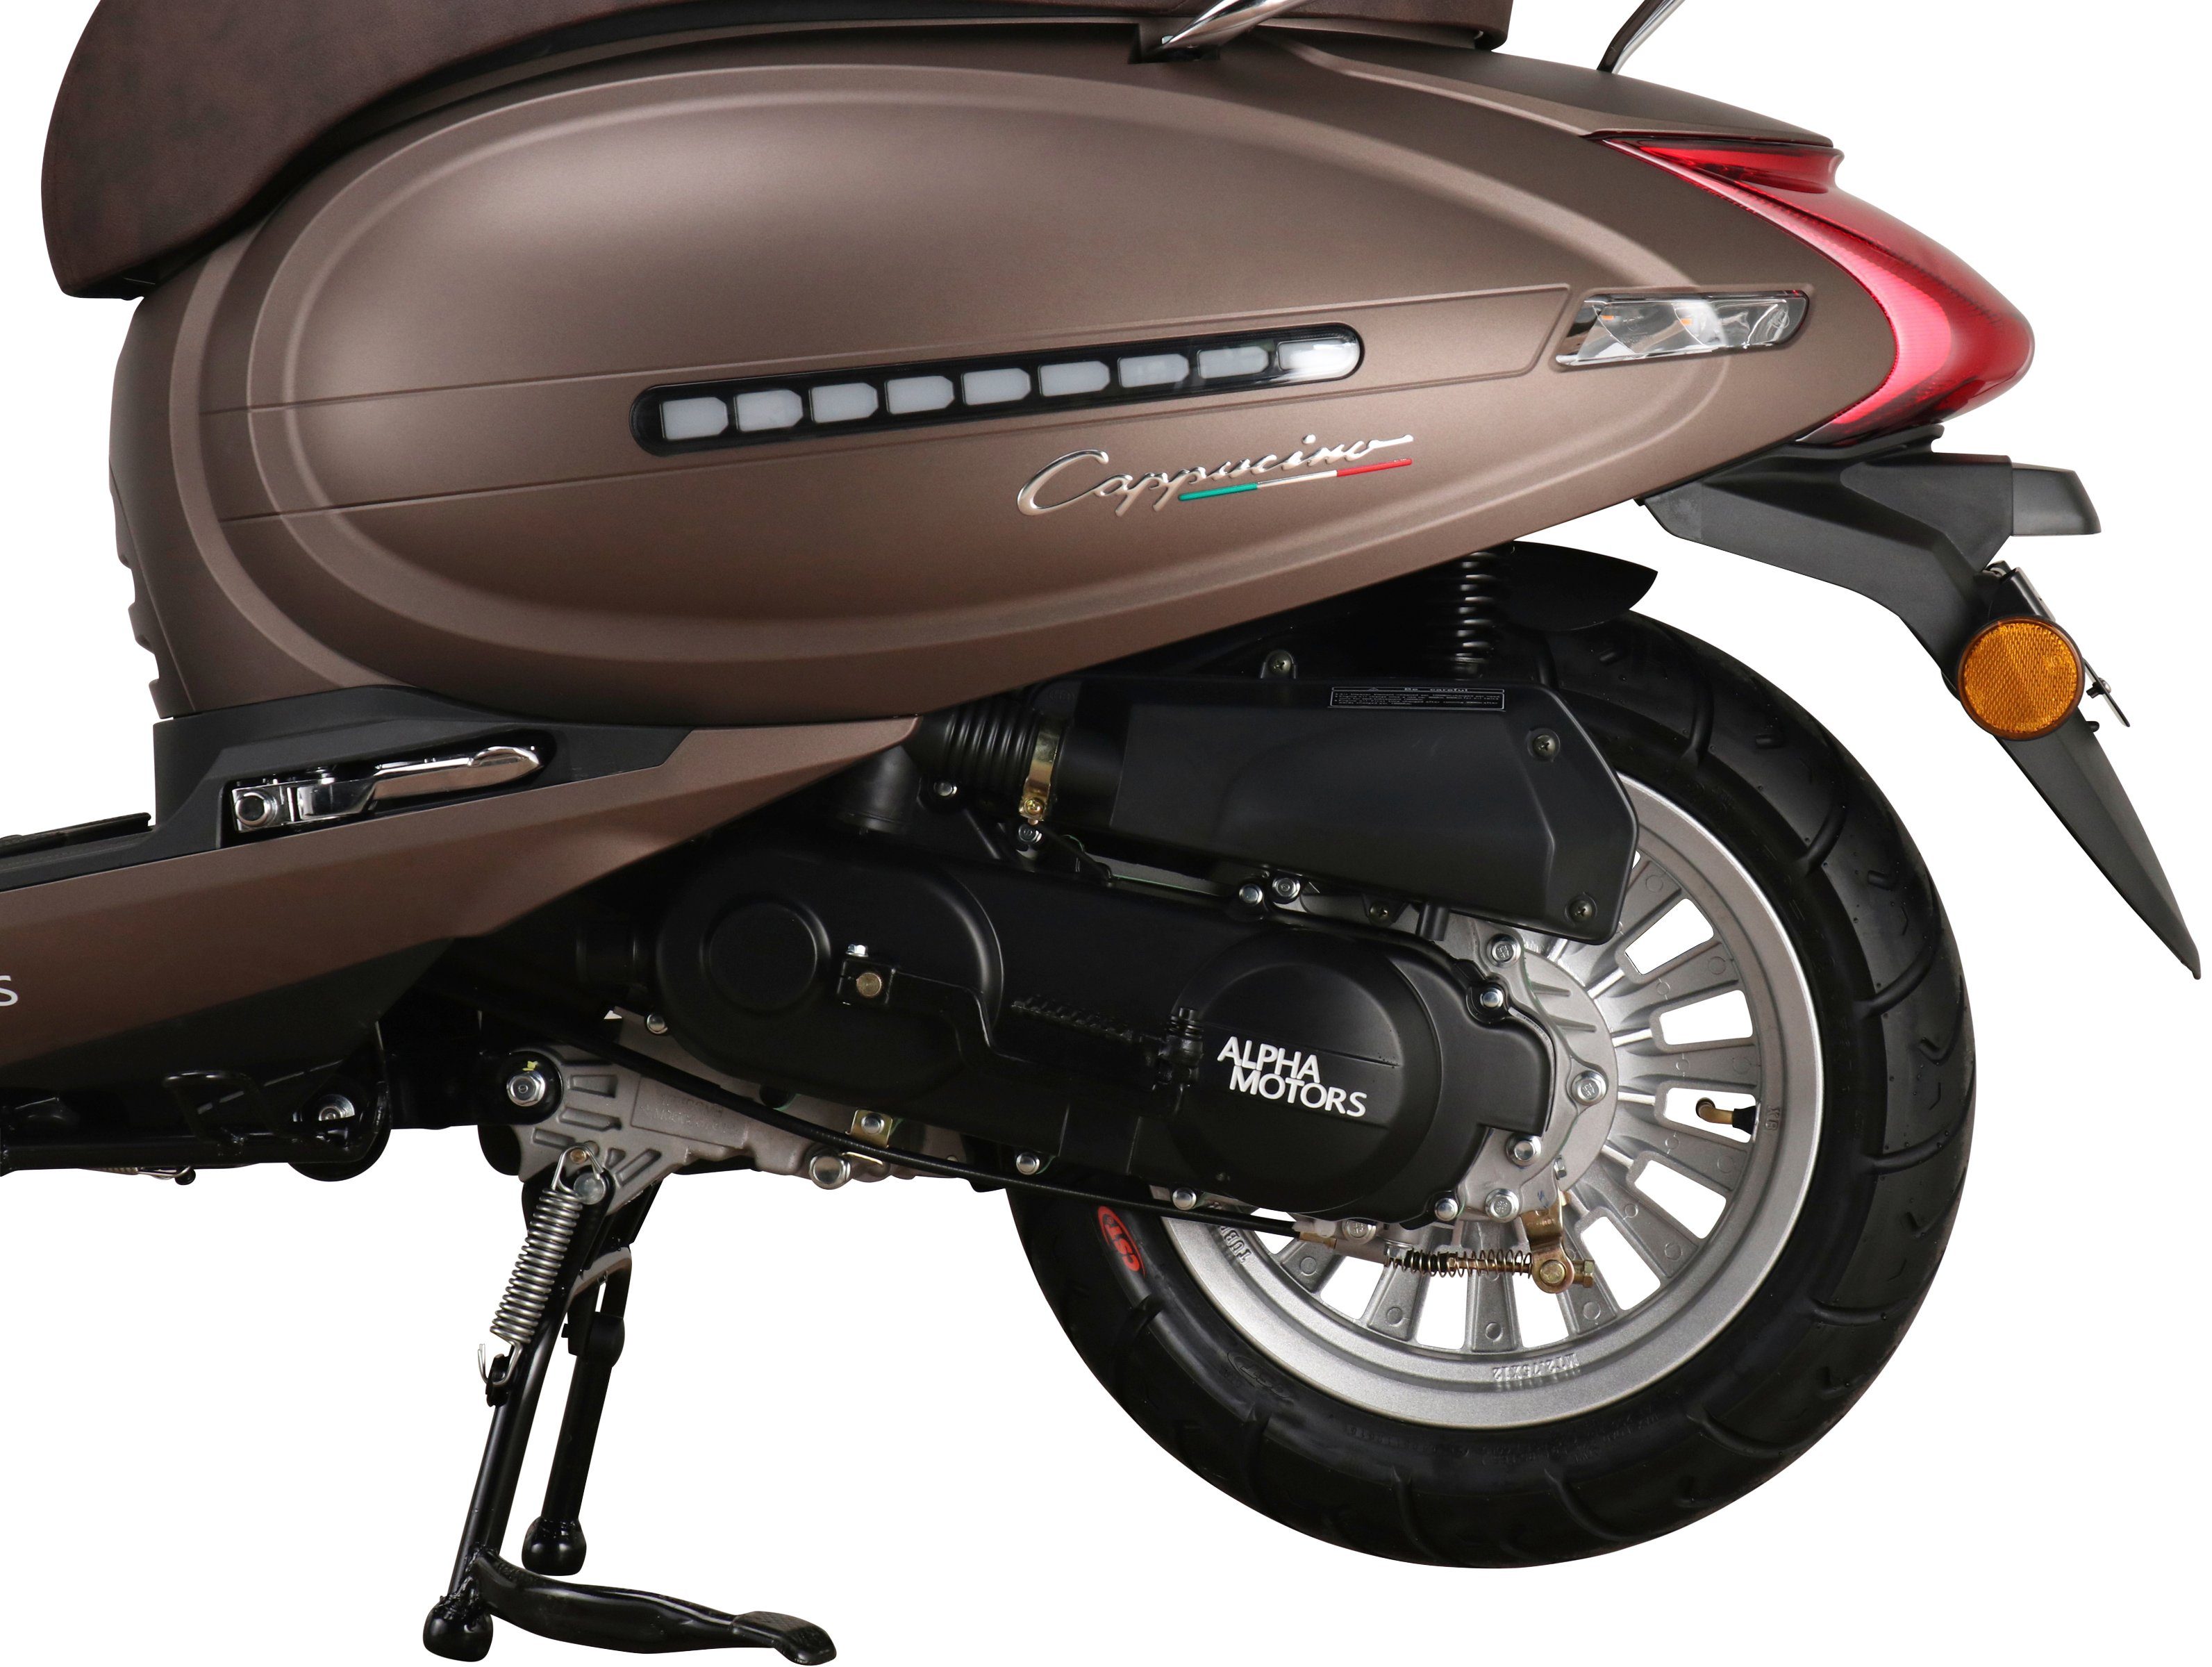 Cappucino, Alpha Motorroller 5 km/h, Euro ccm, 45 Motors 50